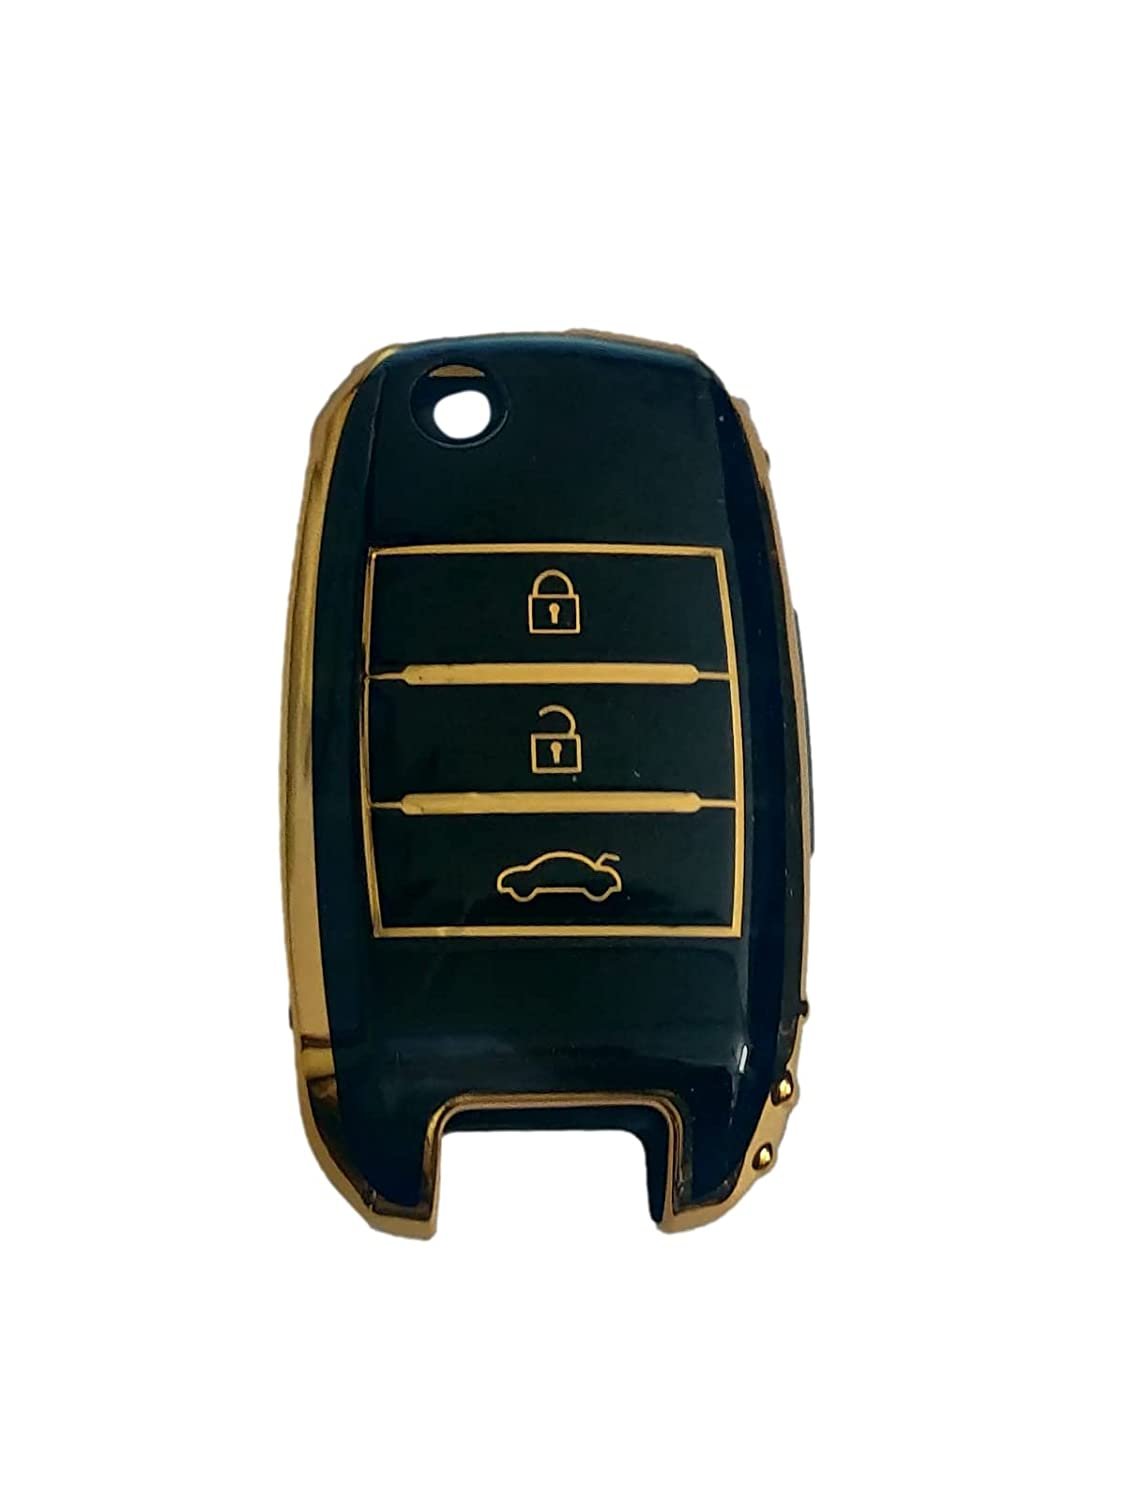 TPU Carbon Fiber Style Car Key Cover Compatible with Kia Flip Key (Gold/Black) Image